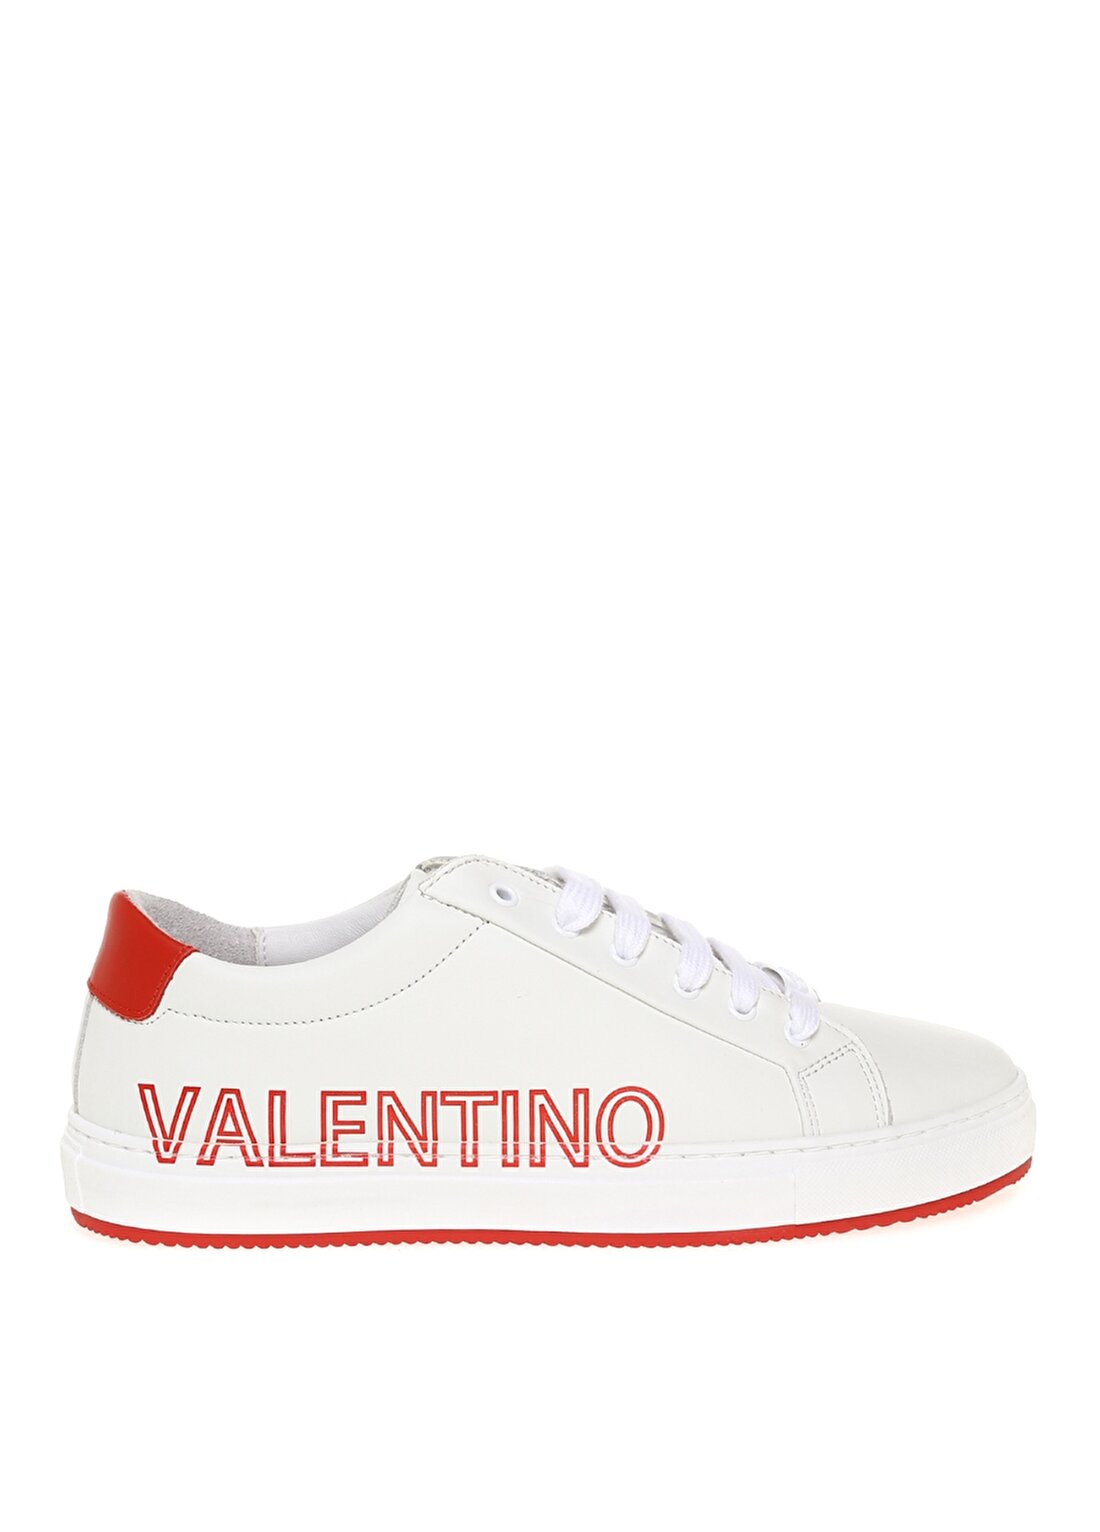 Valentino Beyaz - Kırmızı Erkek Deri Sneaker 92190736-010